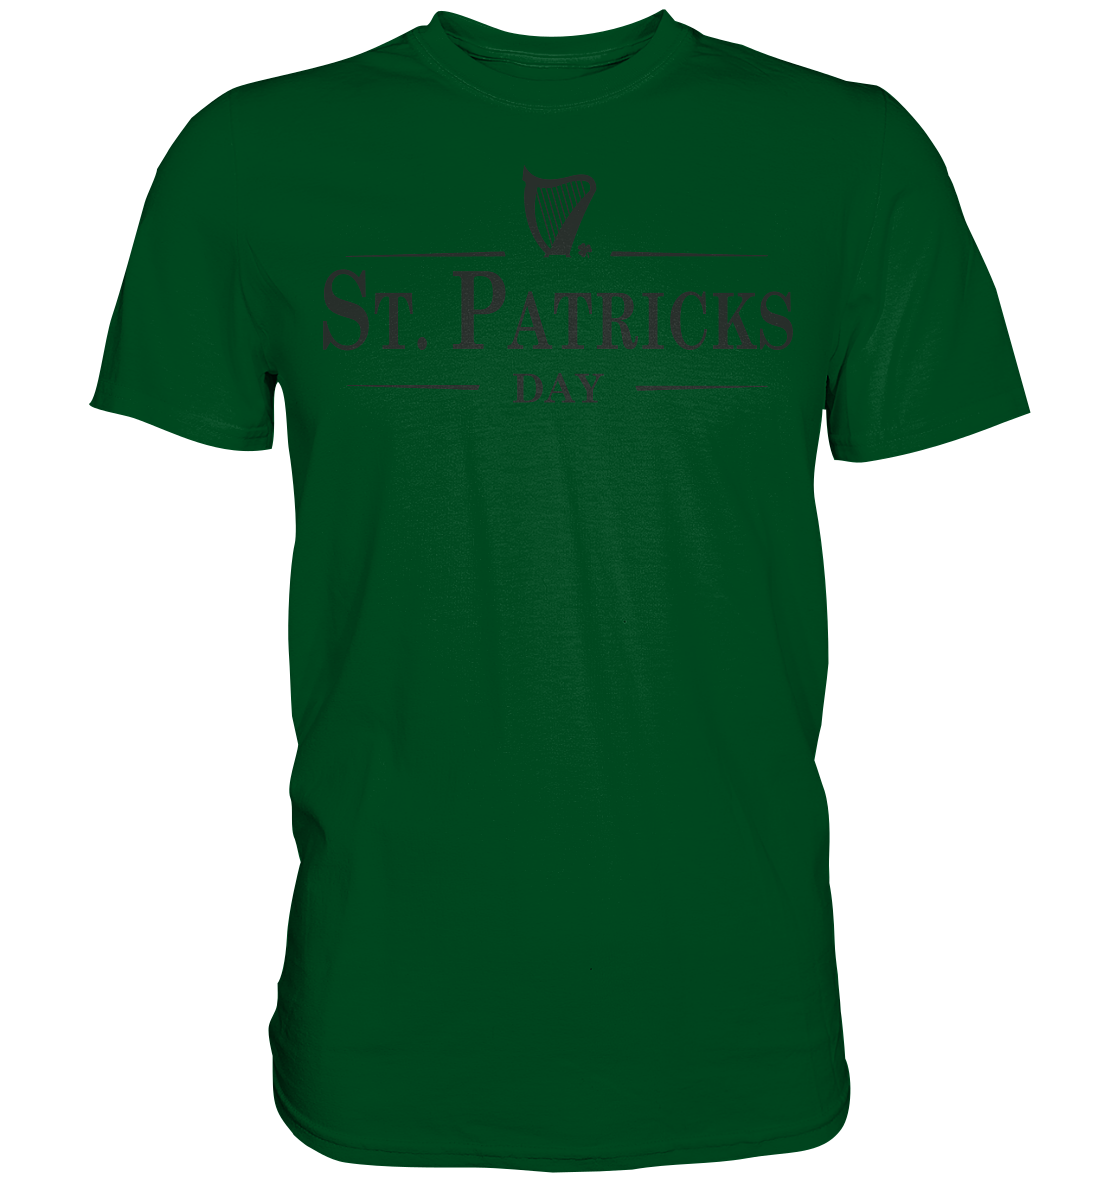 St. Patricks Day "Stout" - Premium Shirt